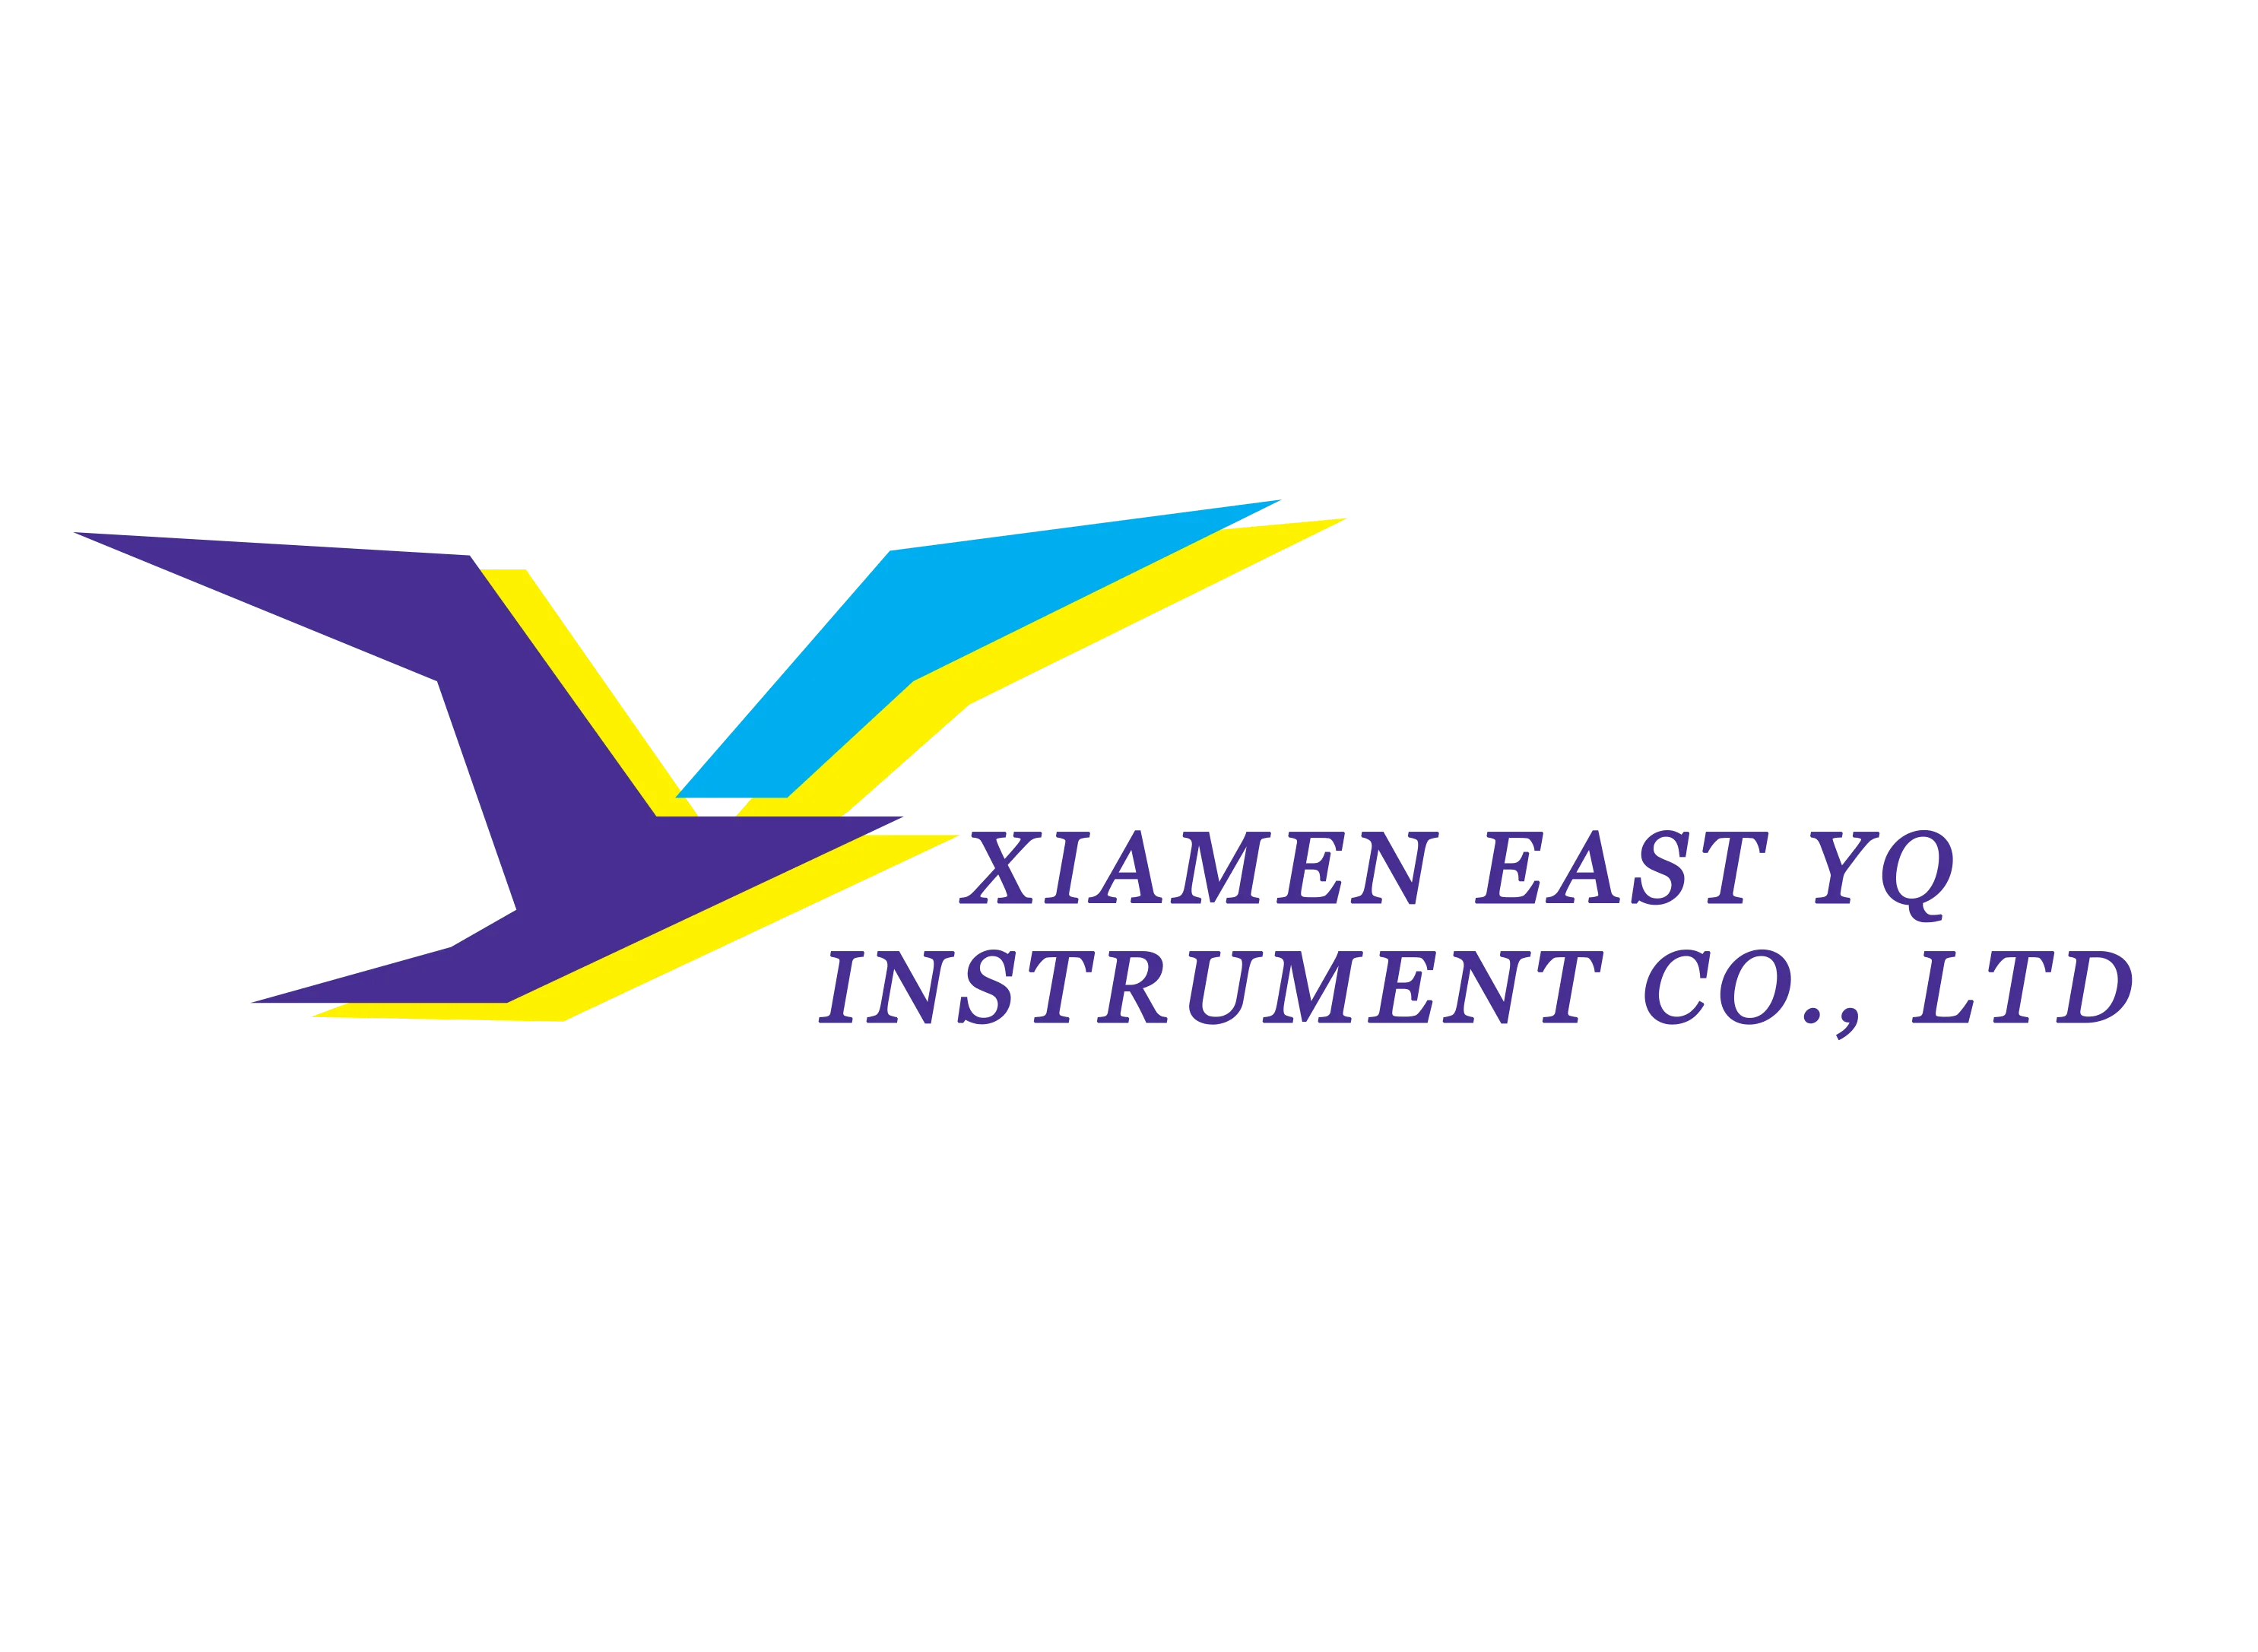 Xiamen East Instrument Co., Ltd.